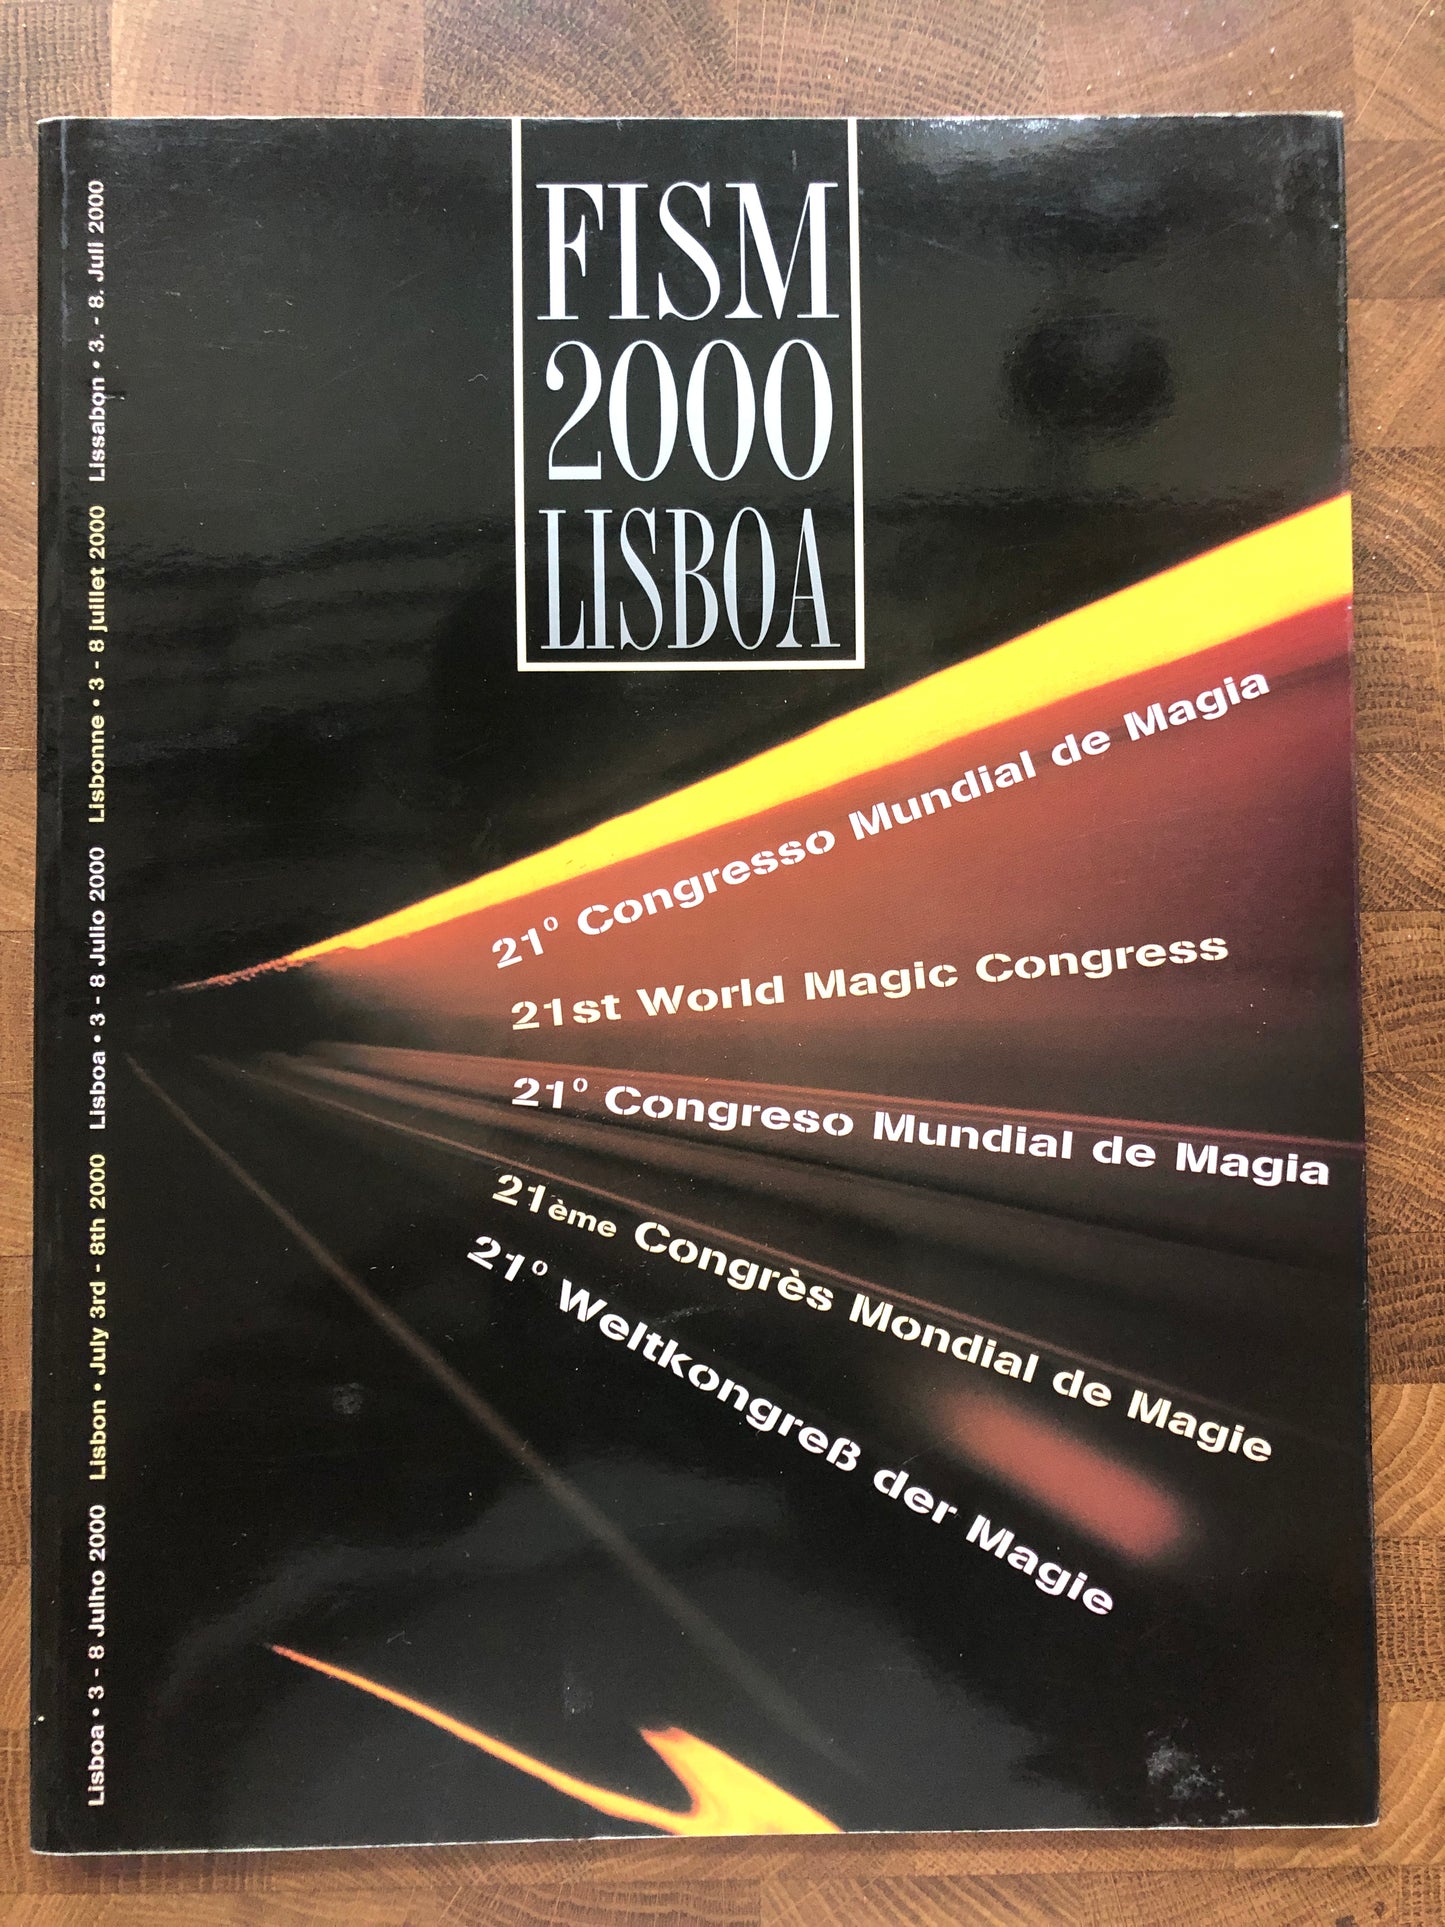 FISM 2000 Program